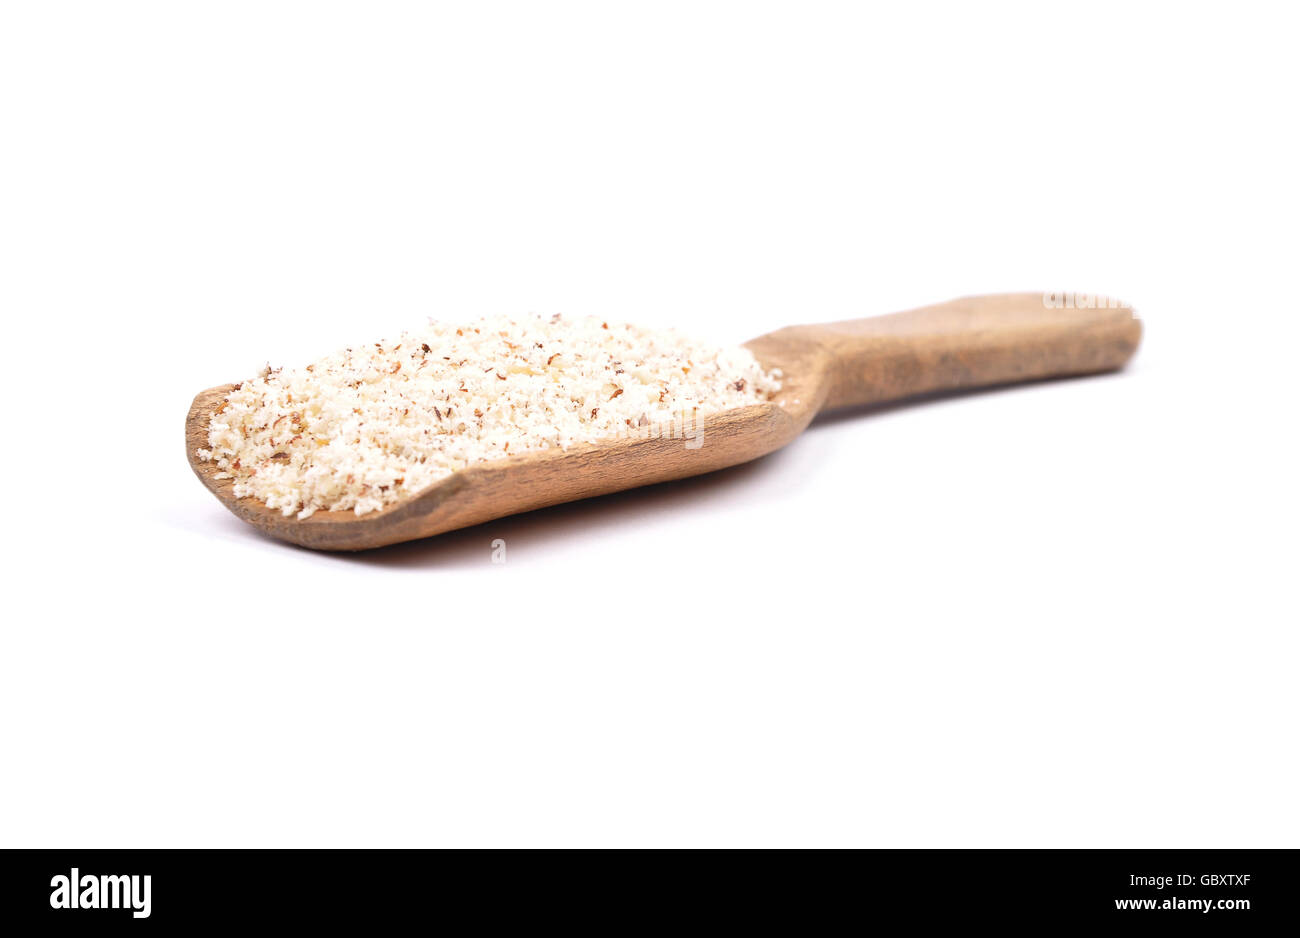 Hazelnuts powdered on shovel Stock Photo